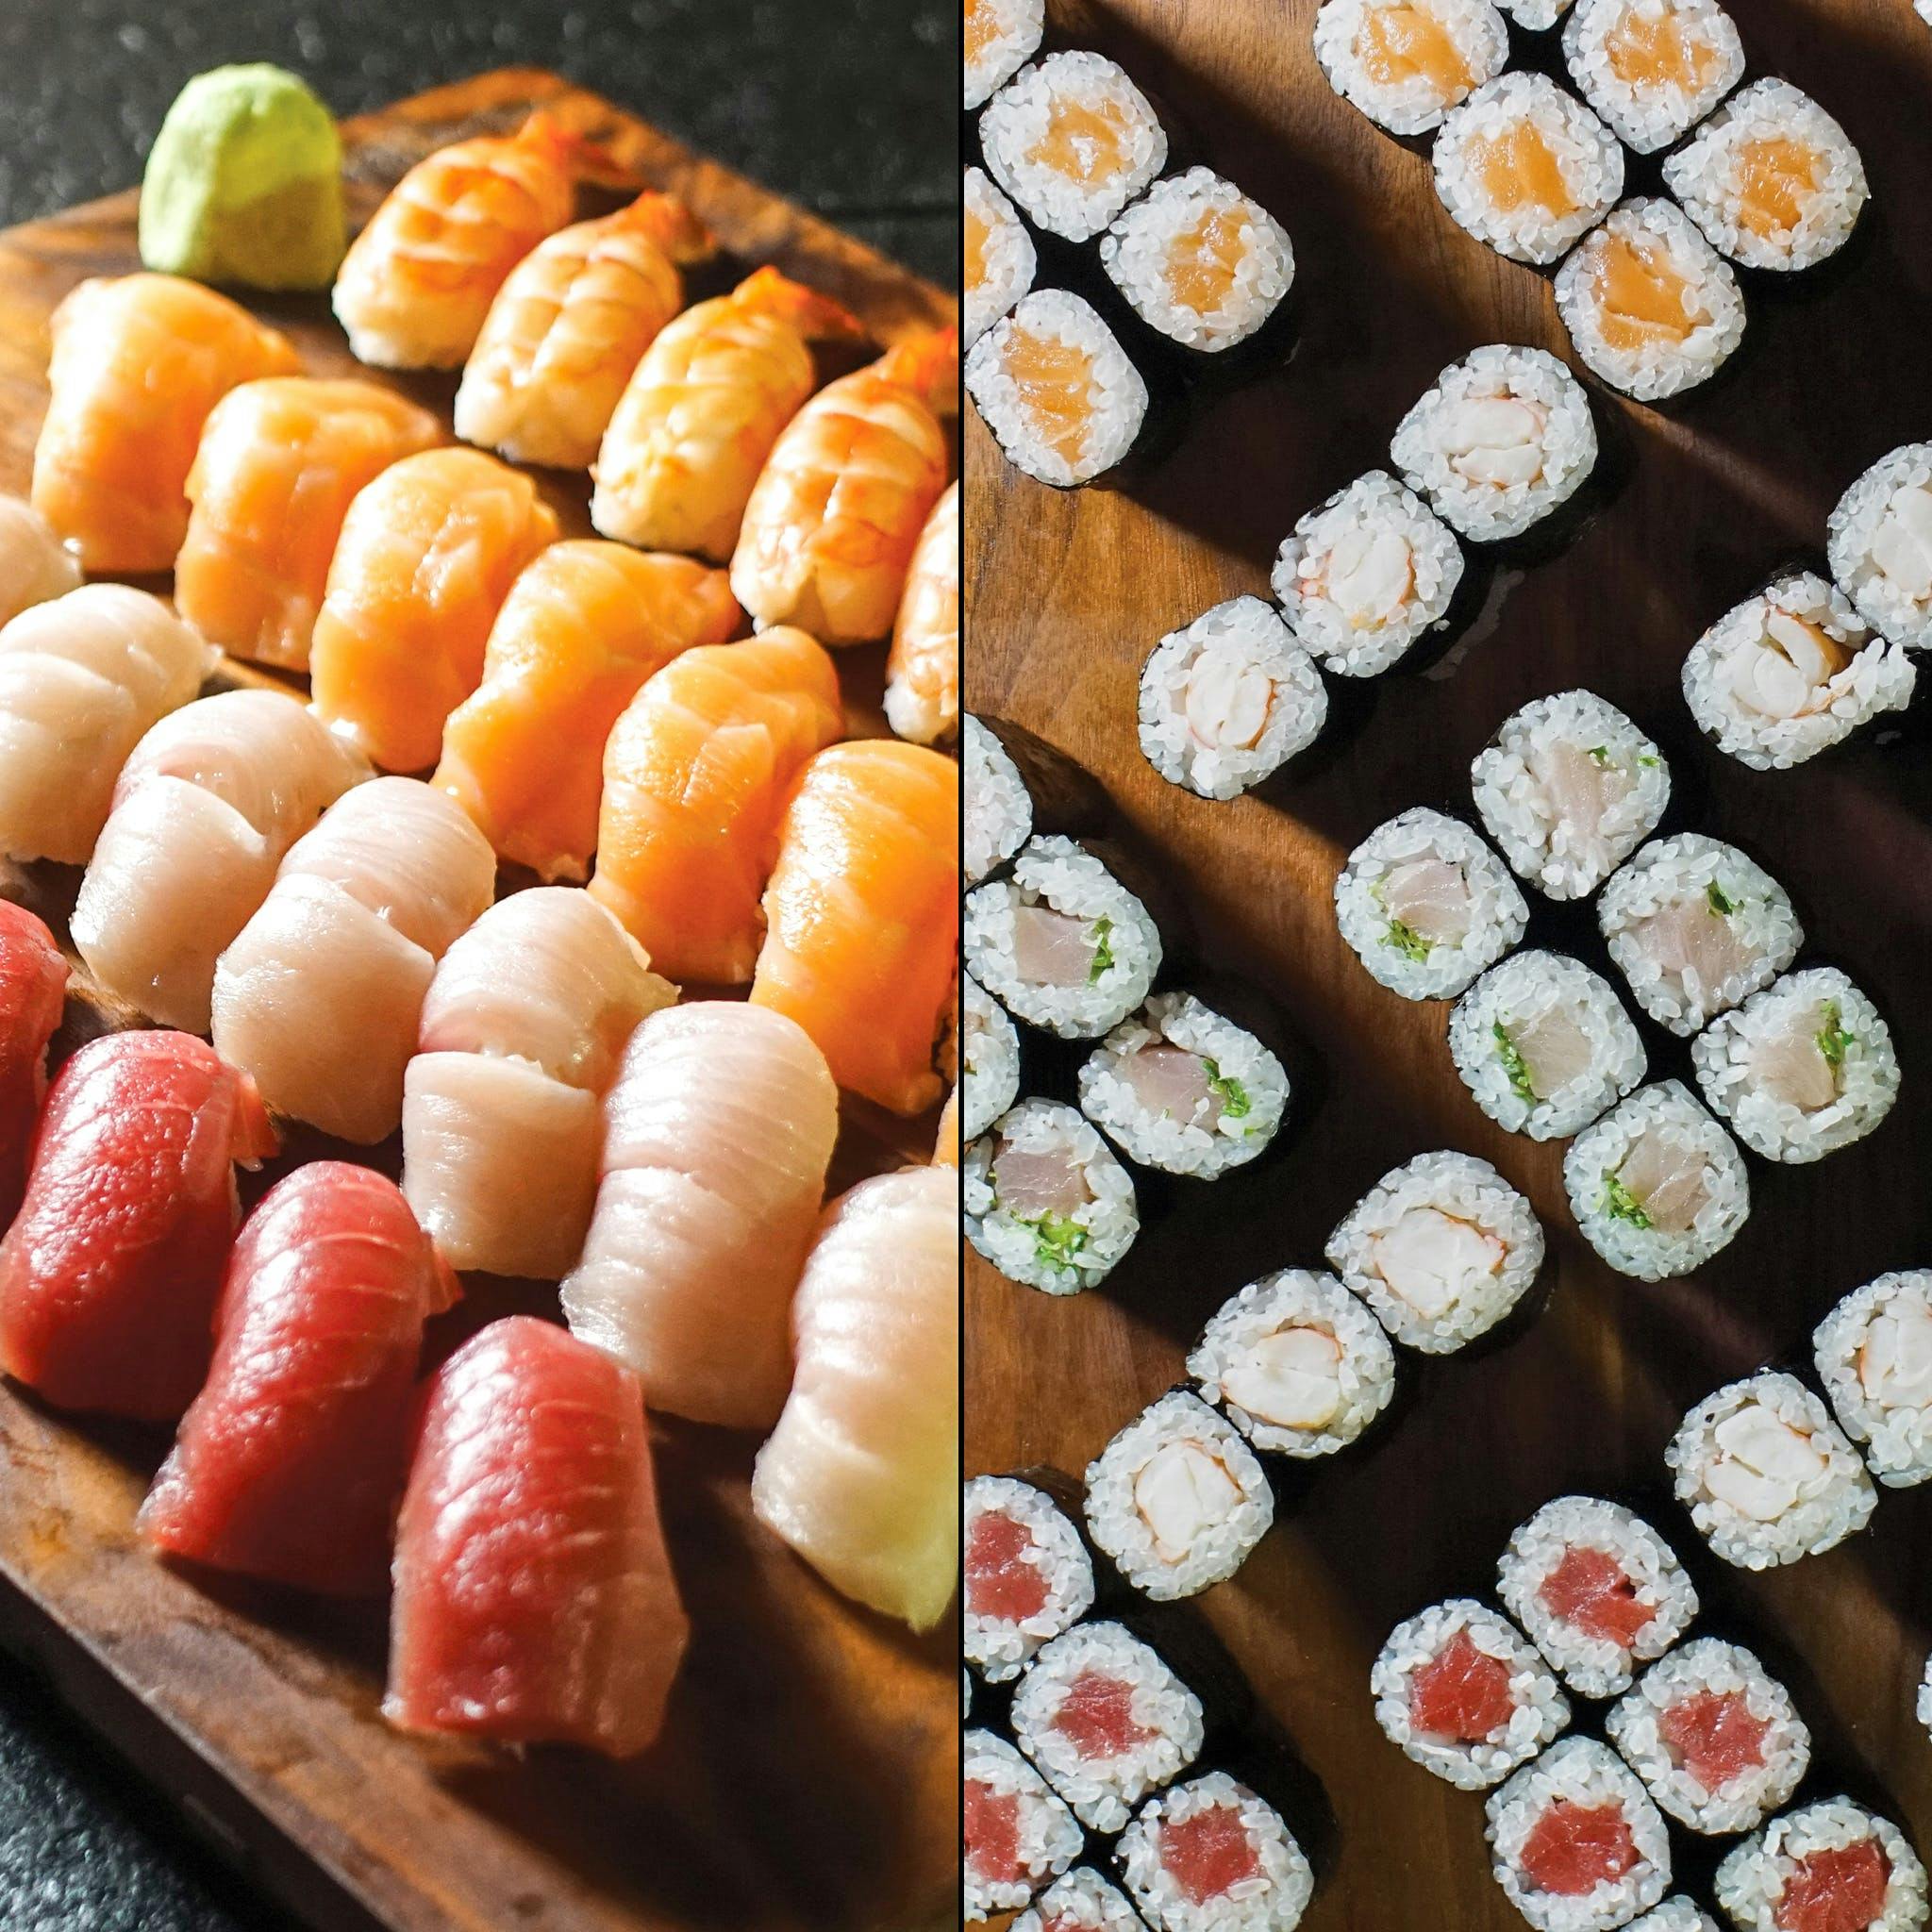 Sushi Making Kit for Beginners - Premium Grade Sushi